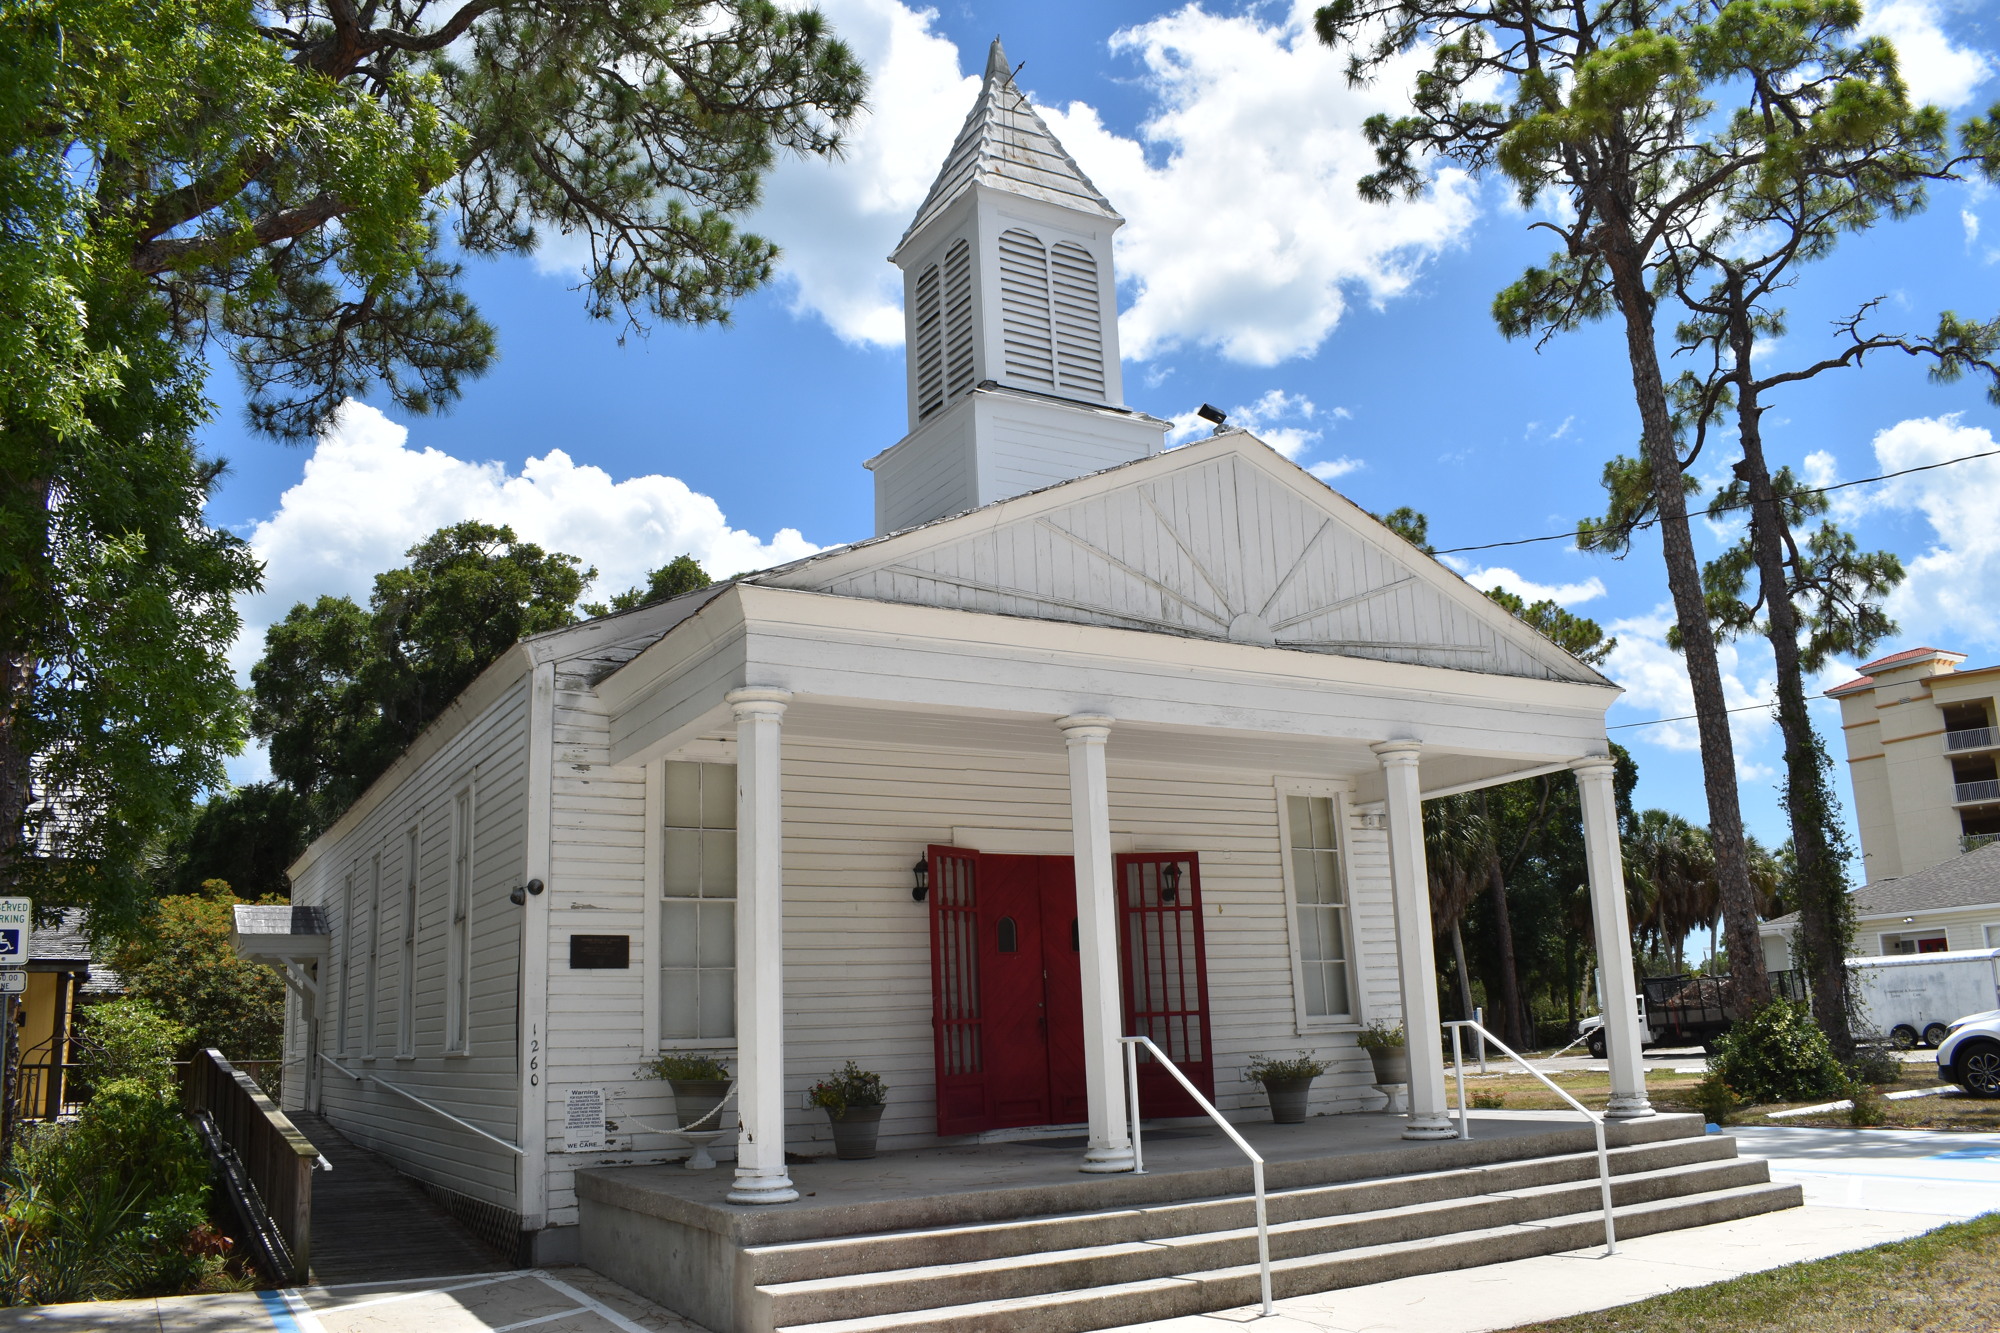 The Crocker Memorial Church was founded in 1901 by Civil War veteran Peter Crocker.